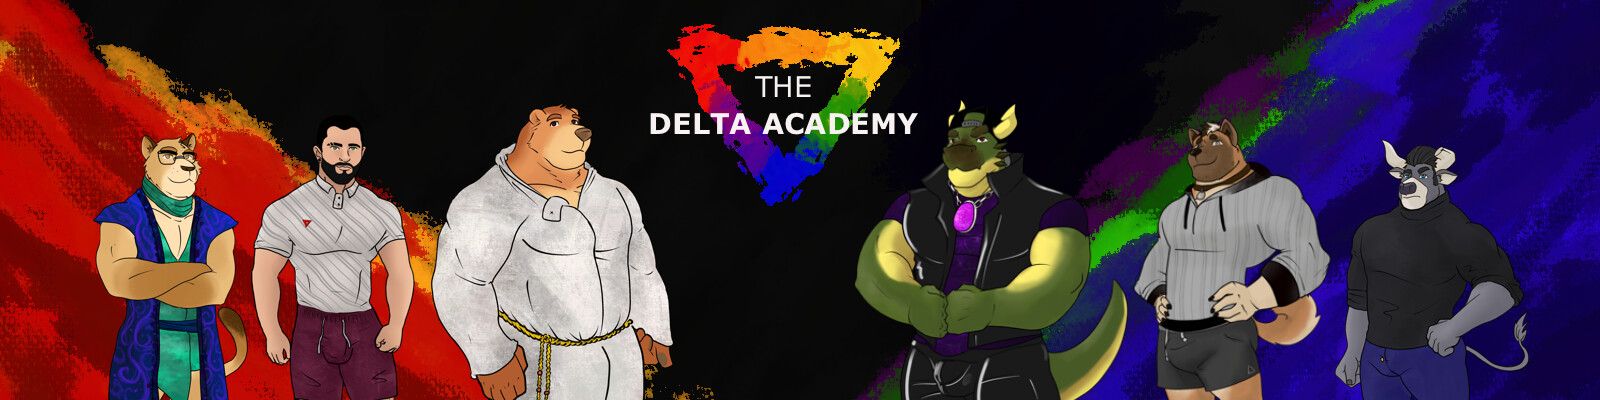 The Delta Academy Main Image